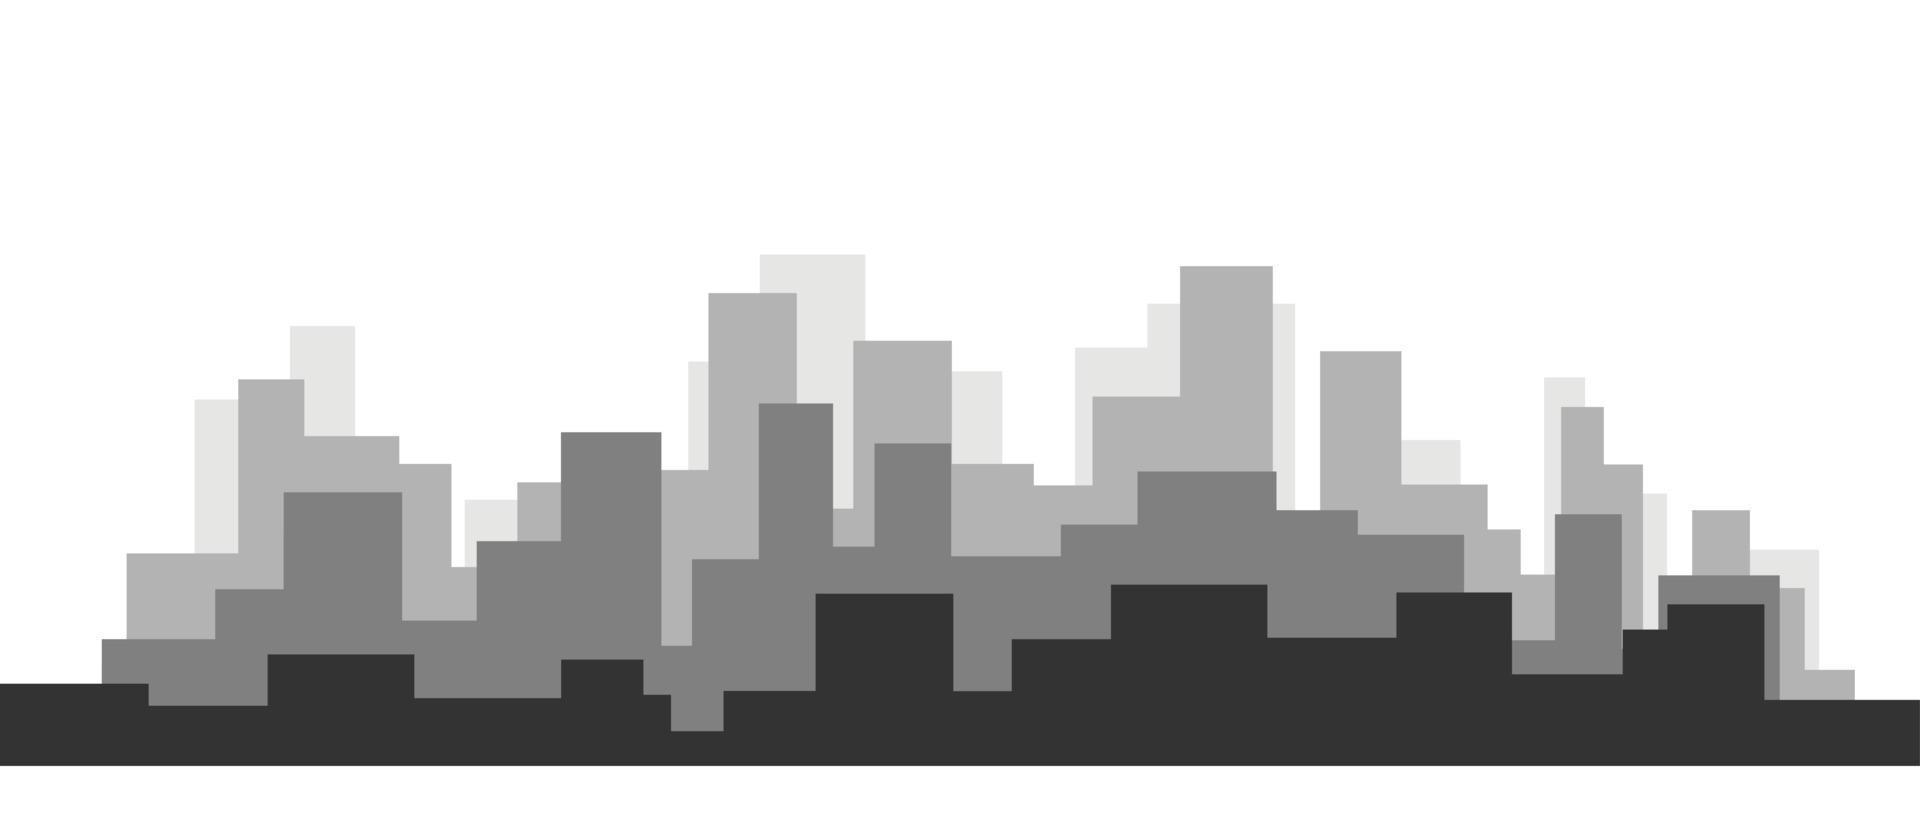 simplicity modern cityscape skyline on white background. vector